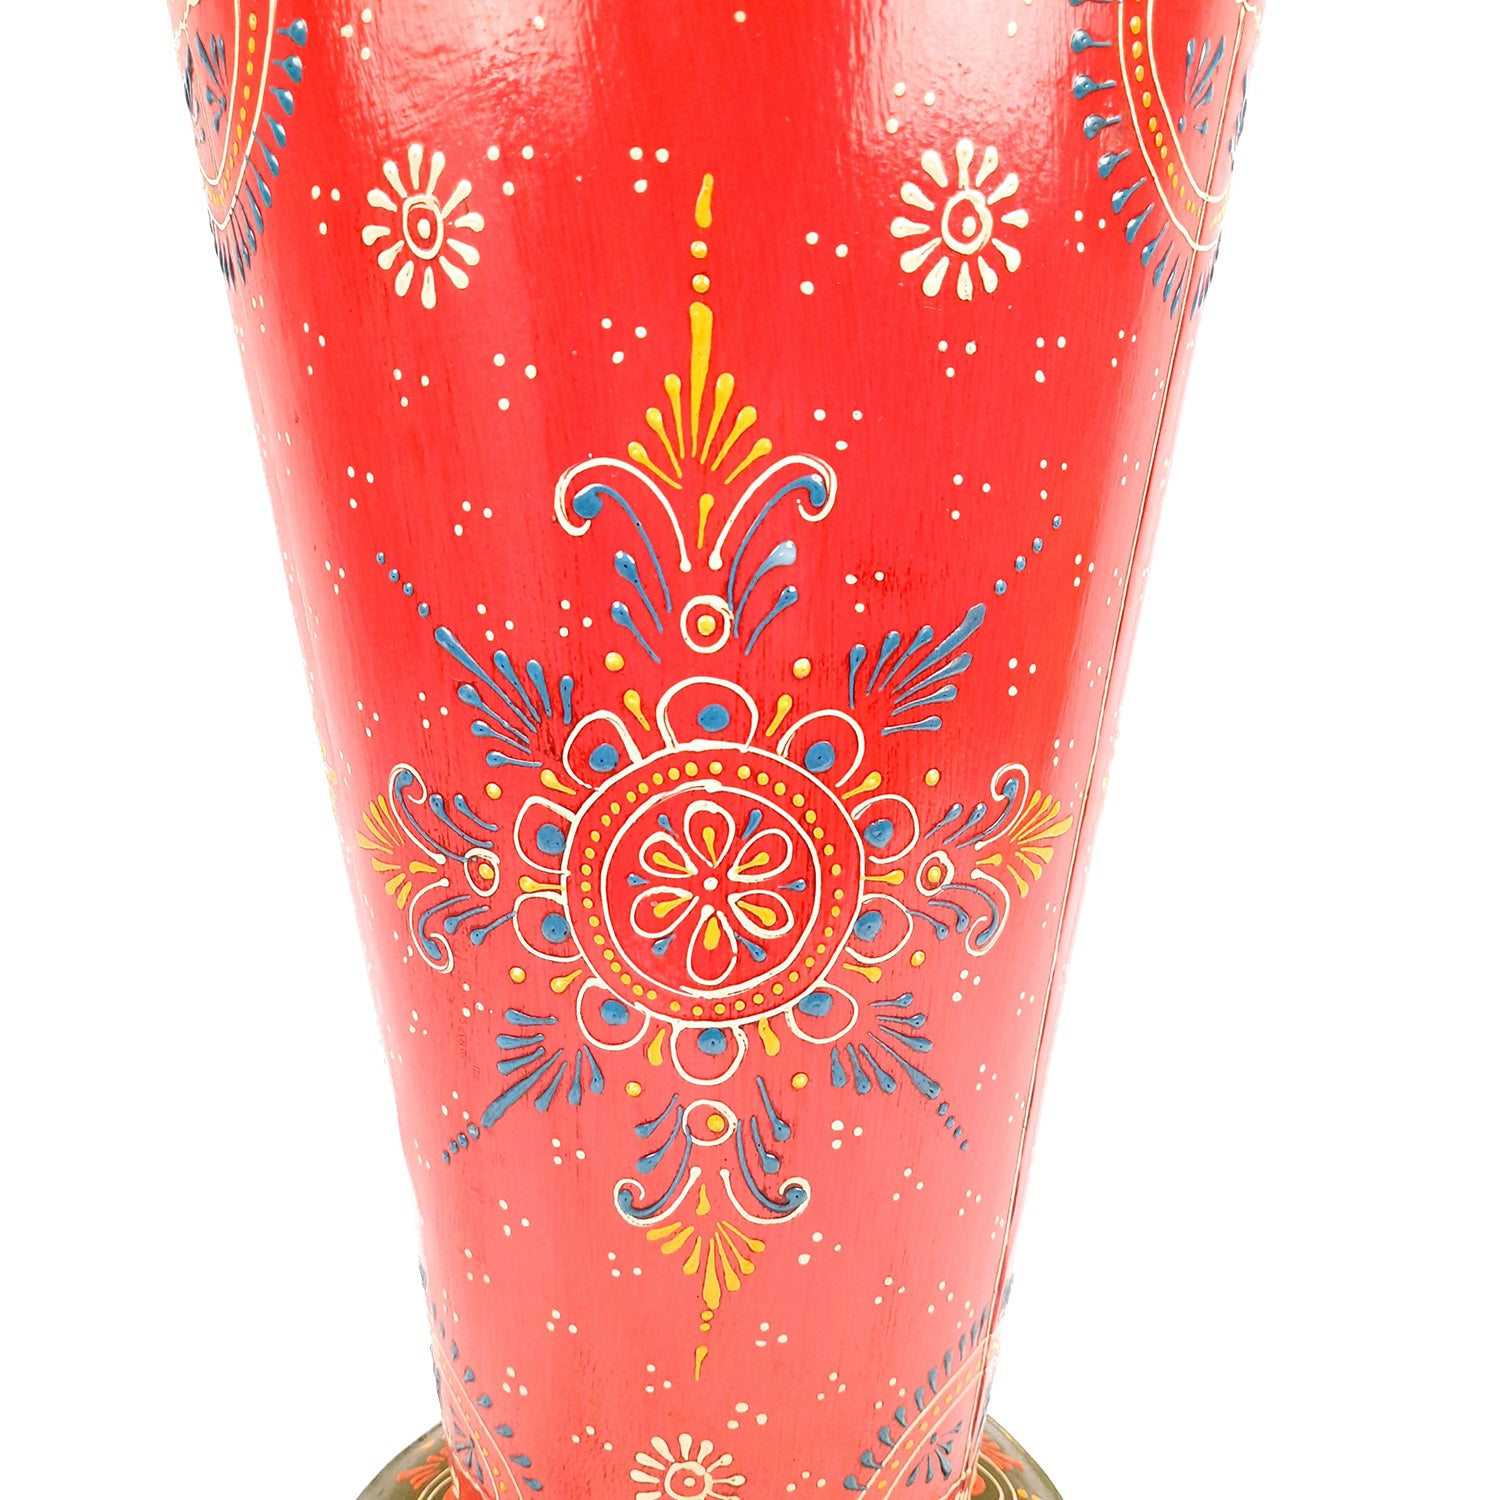 Flower Vases for Interior Decor & Centerpiece : Shop Now